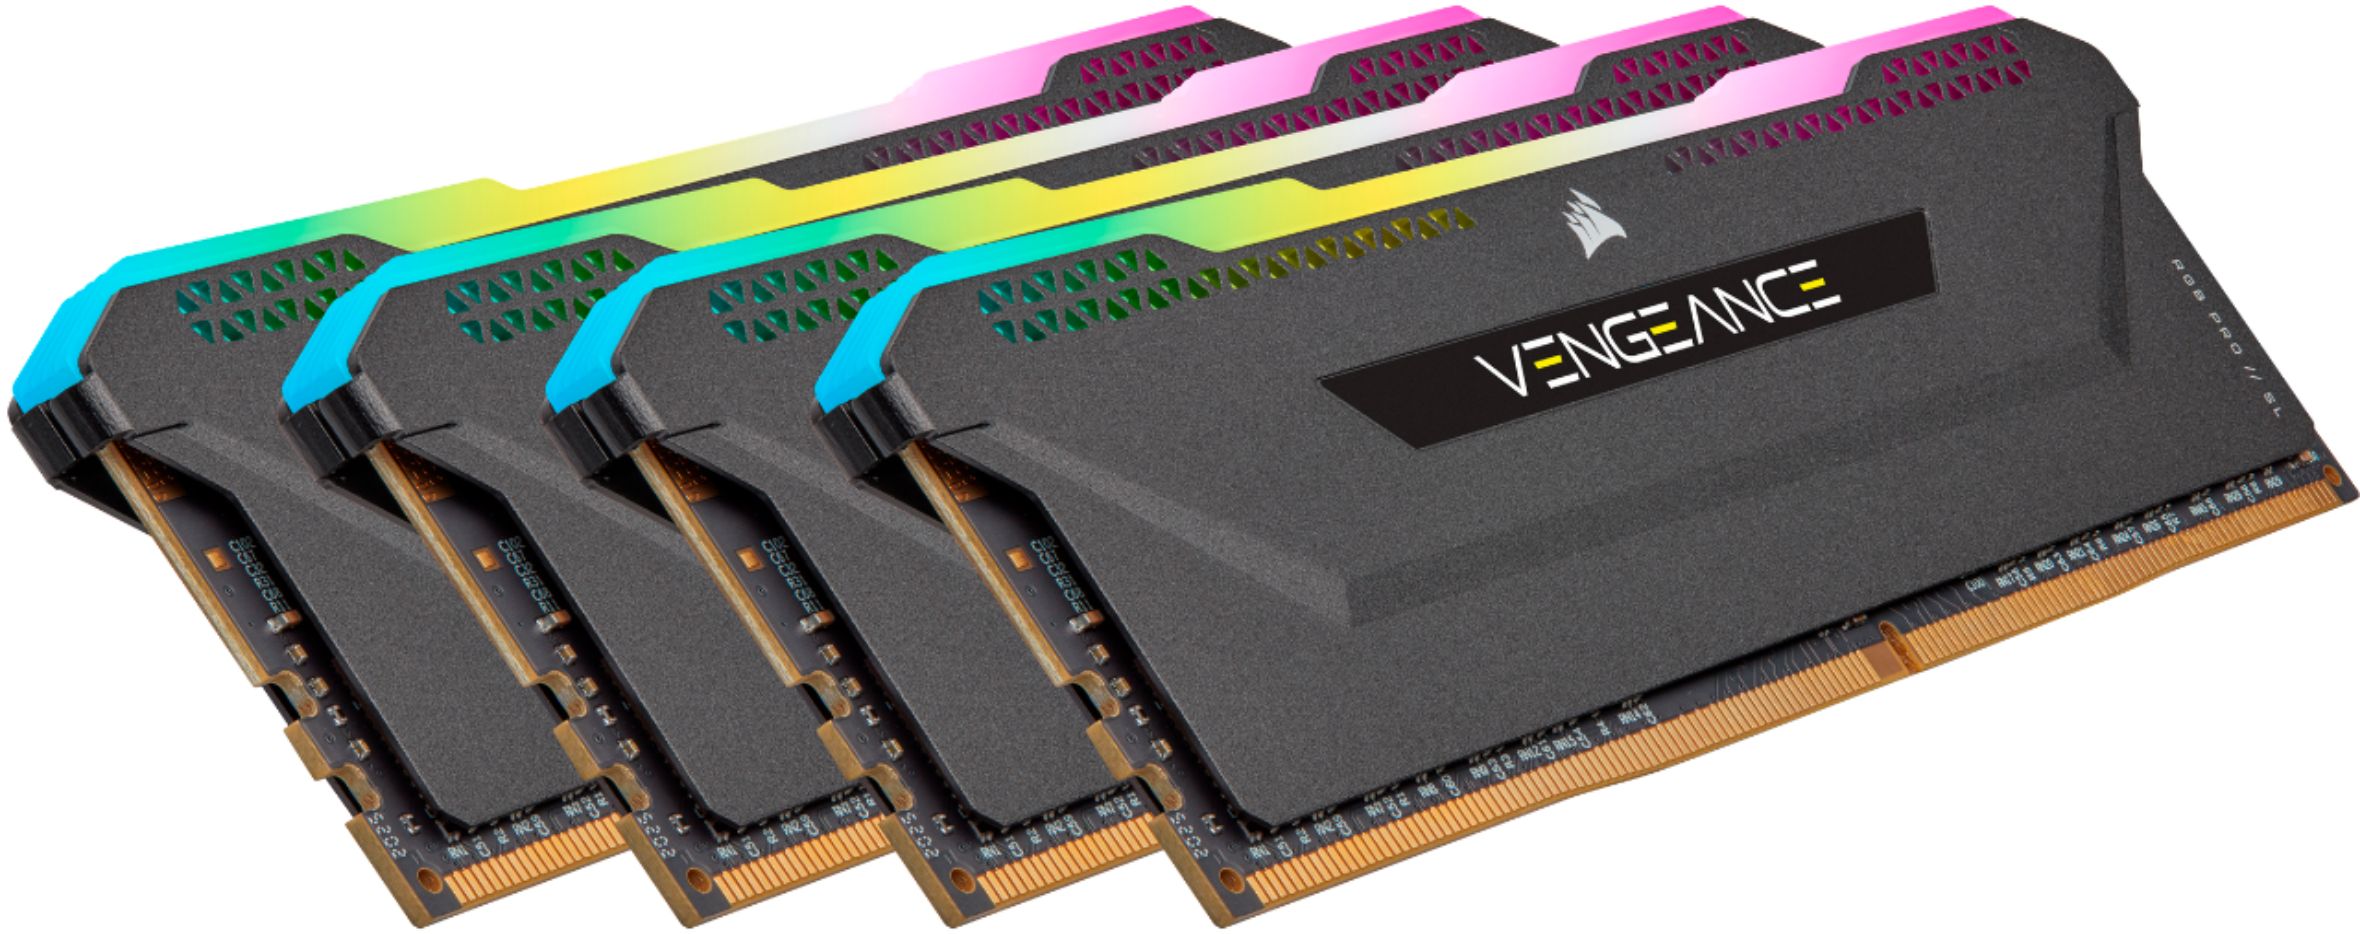 Corsair Vengeance RGB Pro 128GB (4x32GB) DDR4 3200 (PC4-25600) C16 Desktop  memory – Black